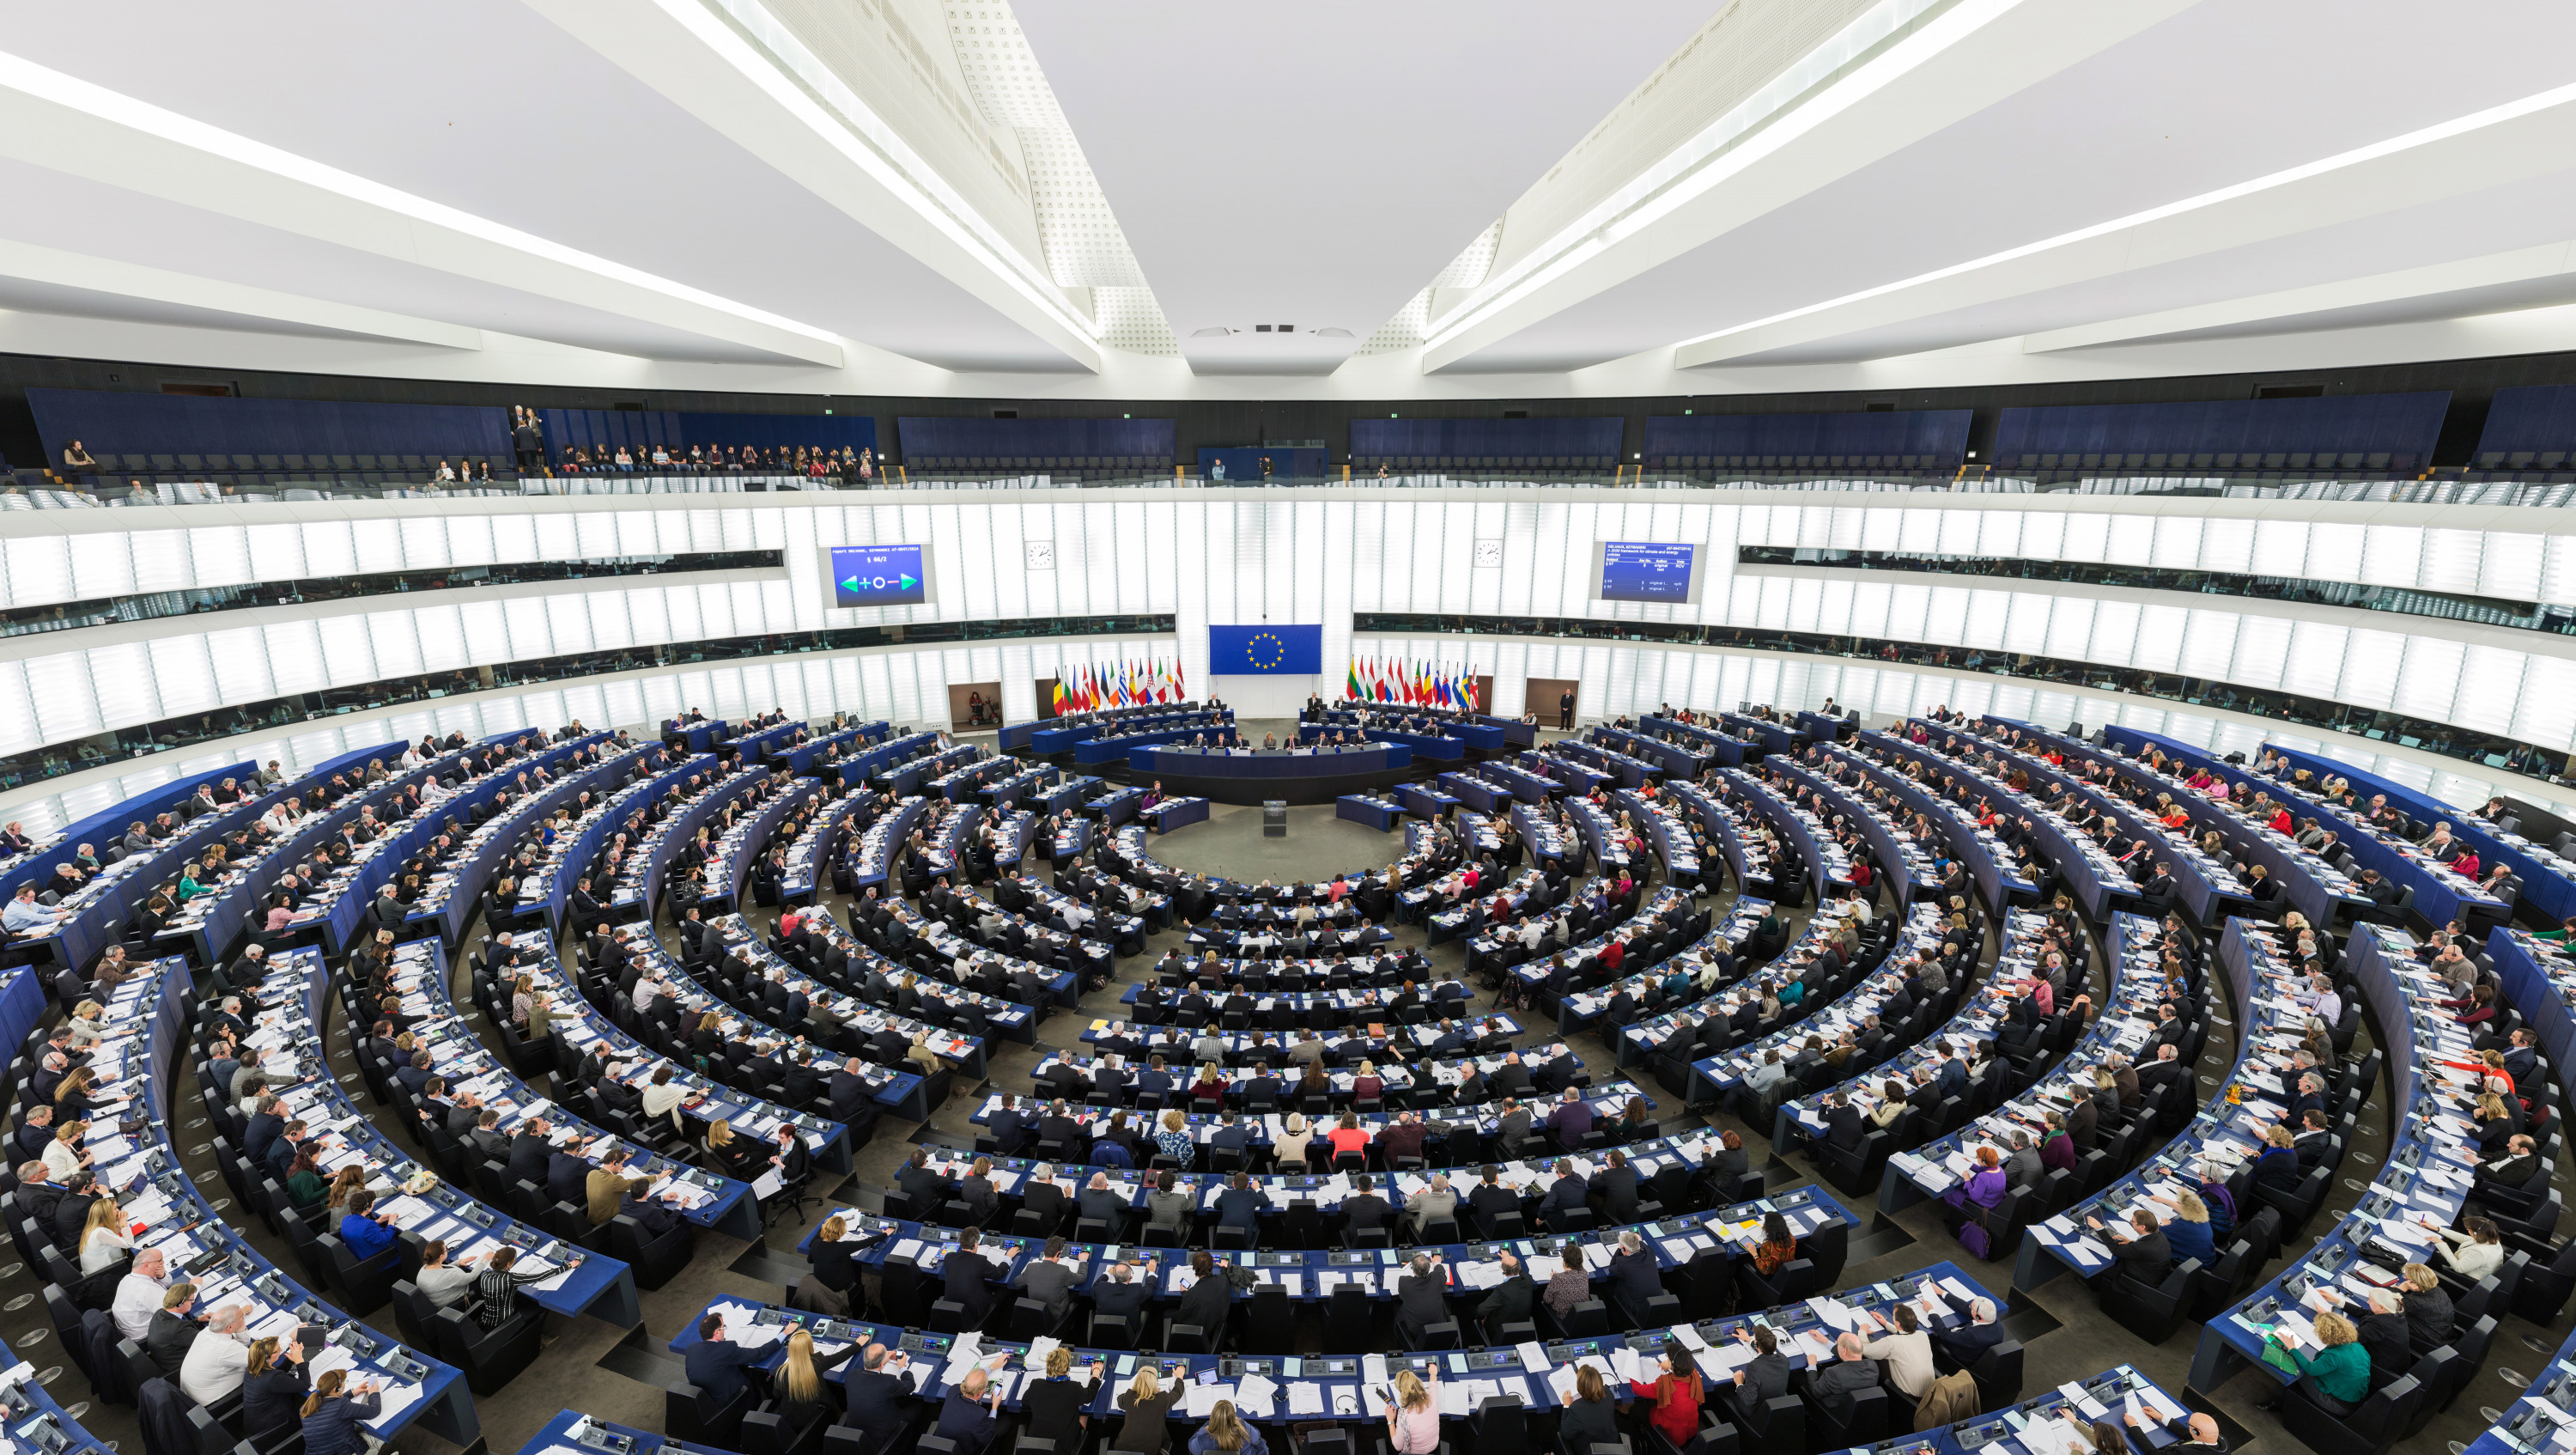 European_Parliament_Strasbourg_Hemicycle_-_Diliff.jpg